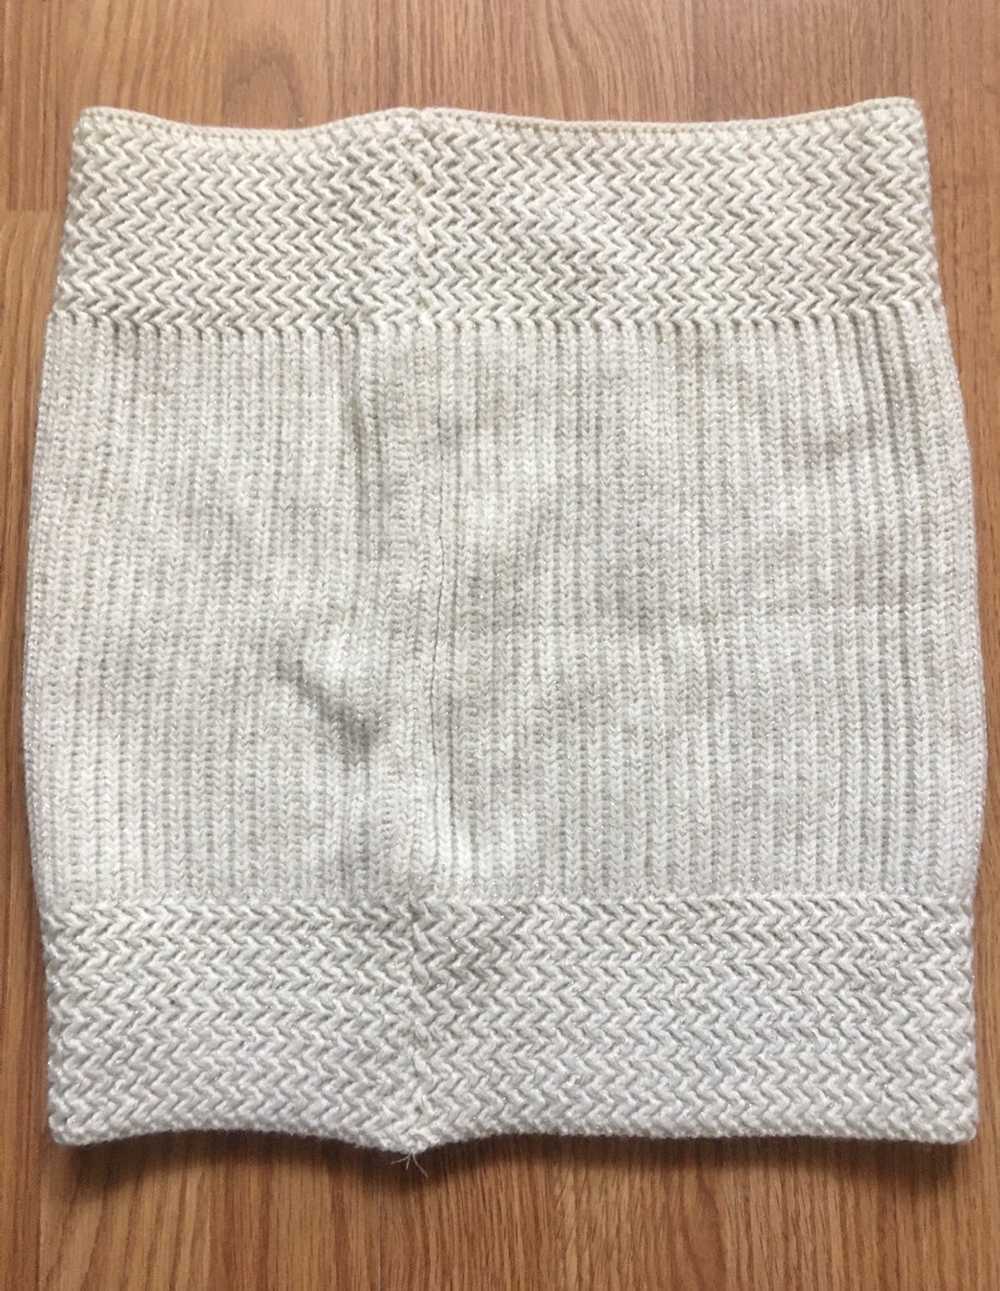 Ugg Woman’s UGG Australia Beige Knit Wool Snood S… - image 4